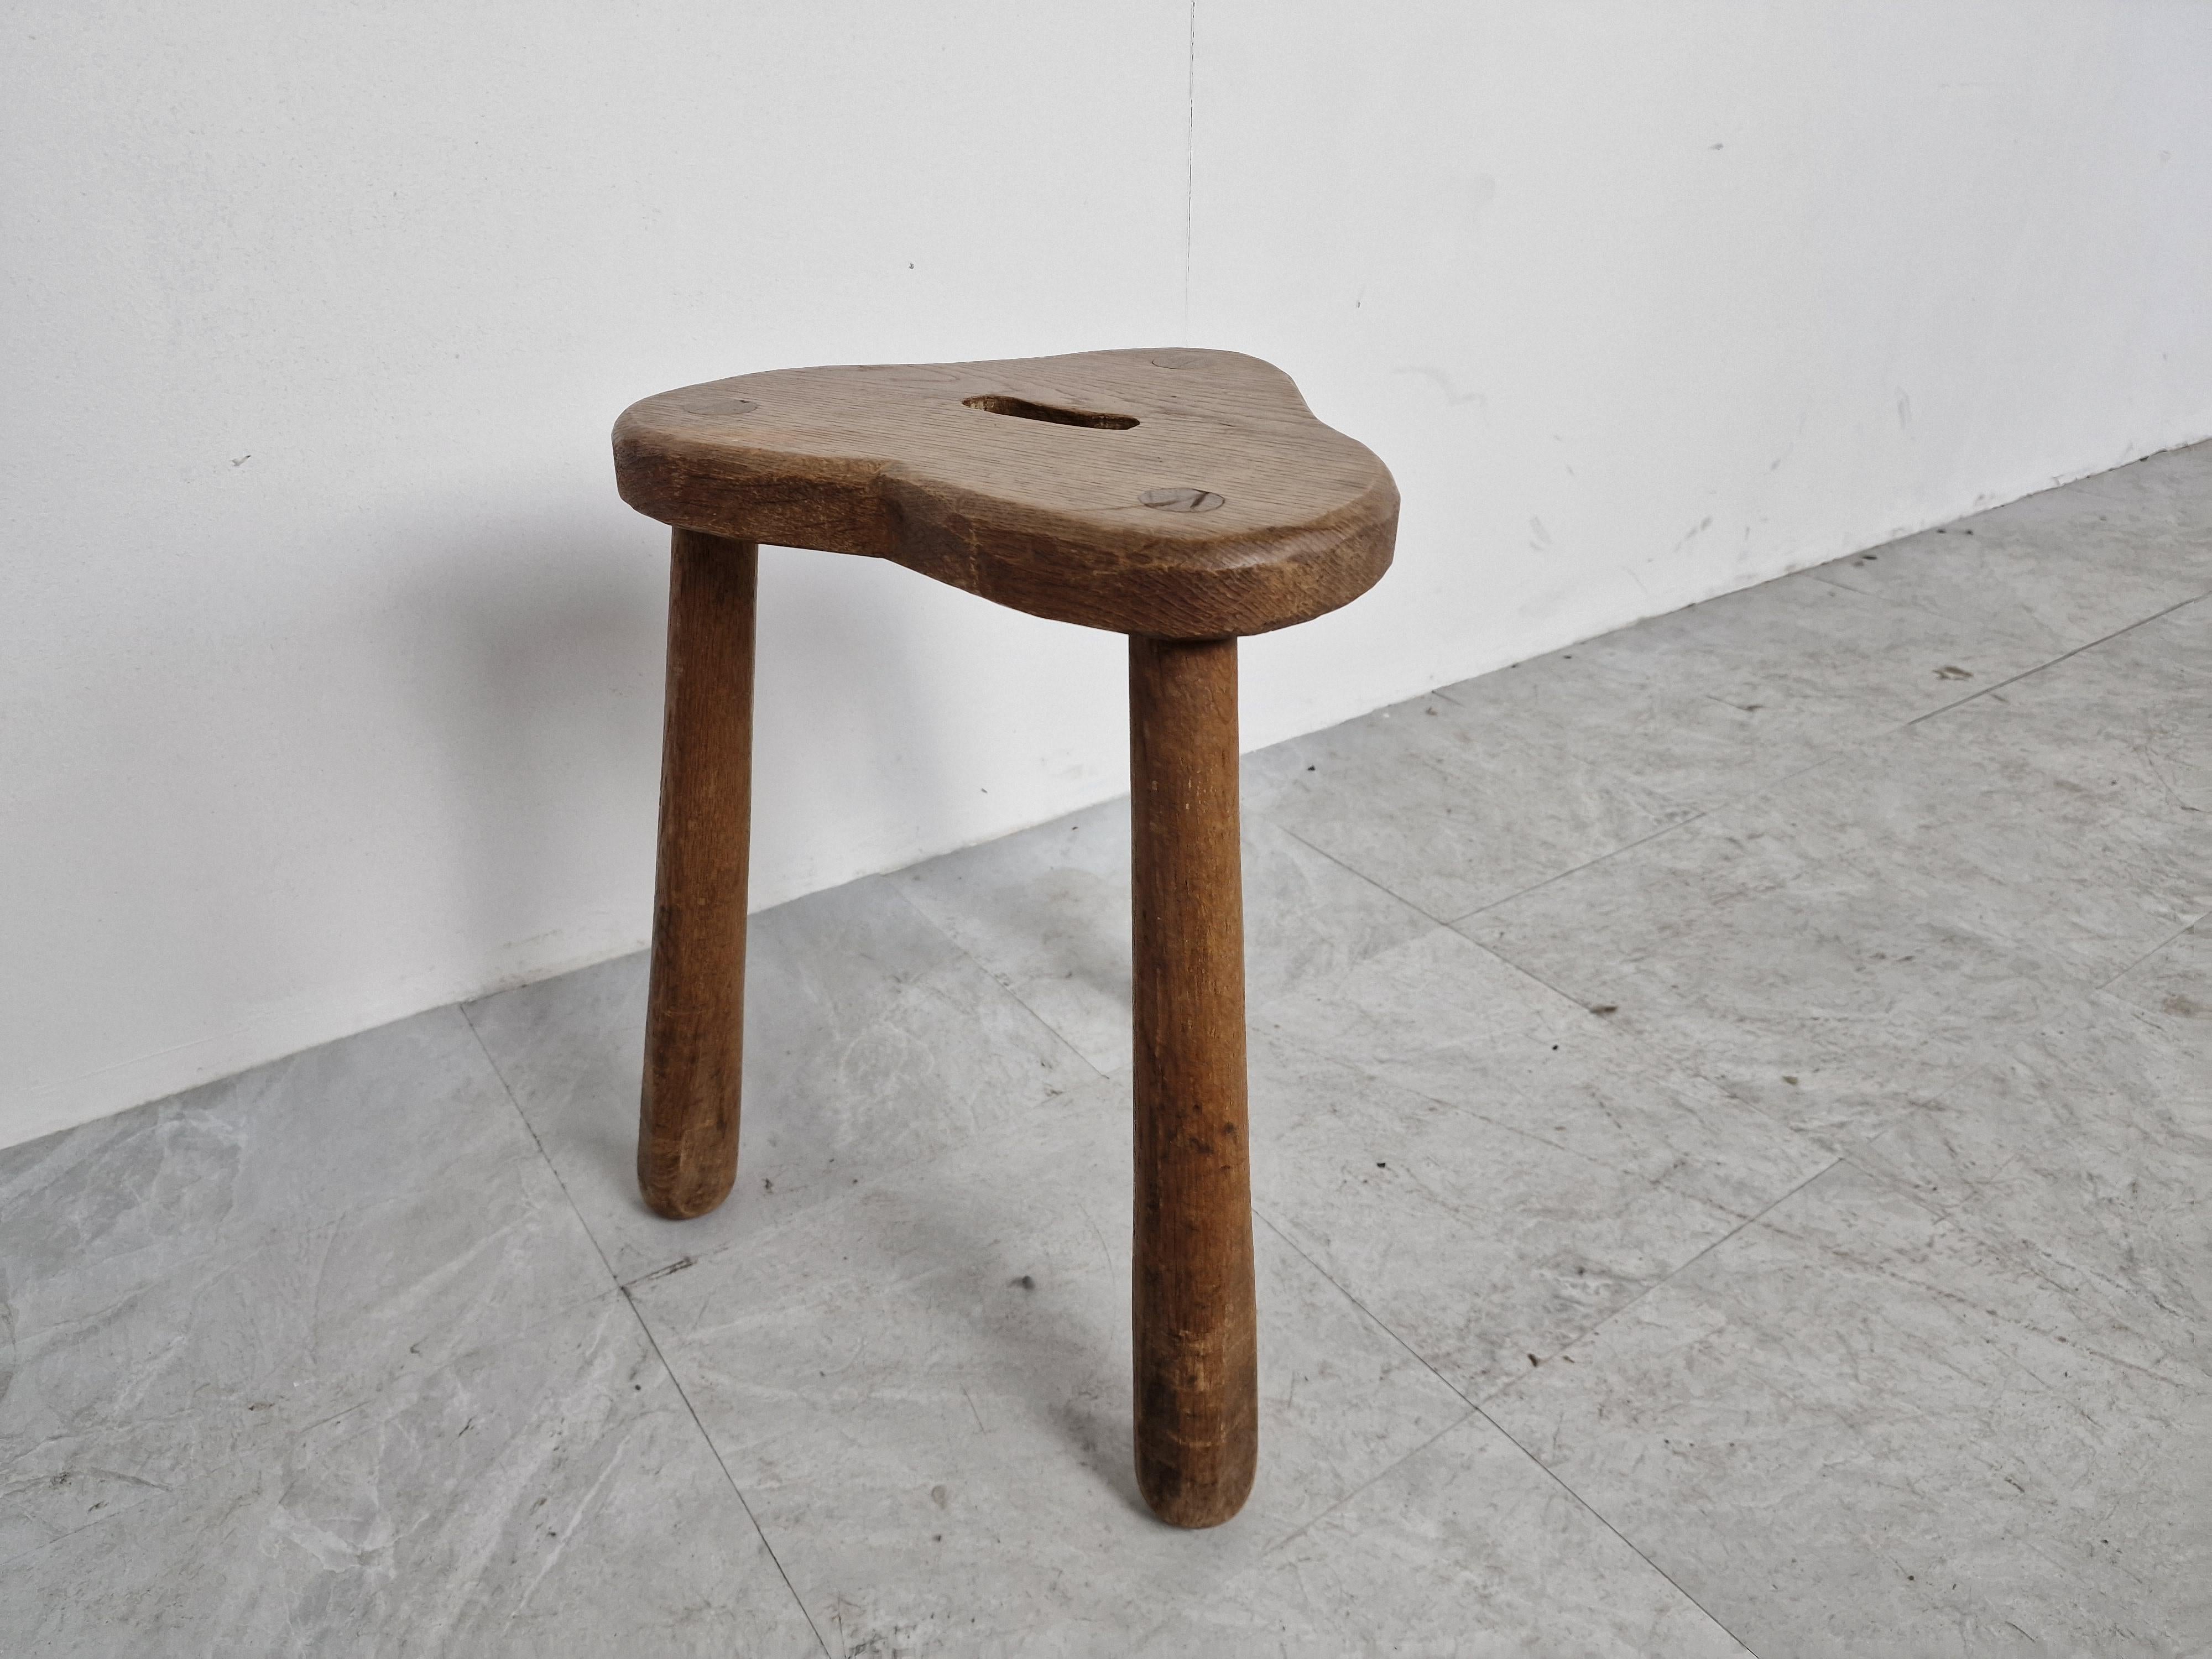 Primitive handmade tripod heart shaped farm stool.

Timeless, decorative piece

1950s - France

Good condition

Dimensions:
Height: 44cm/17.32